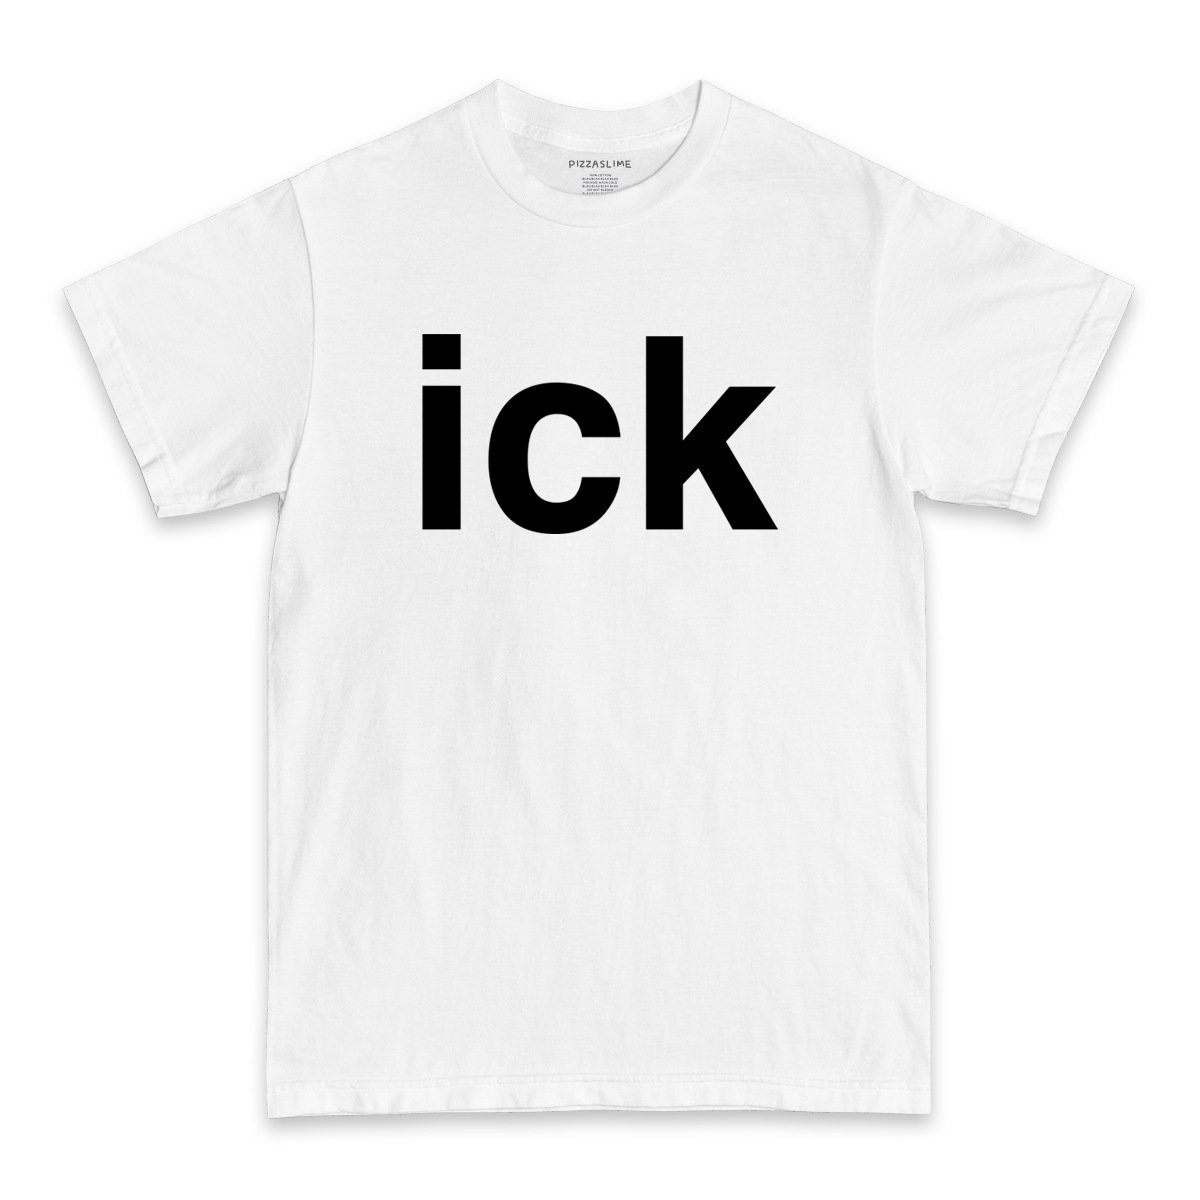 ICK T-shirt